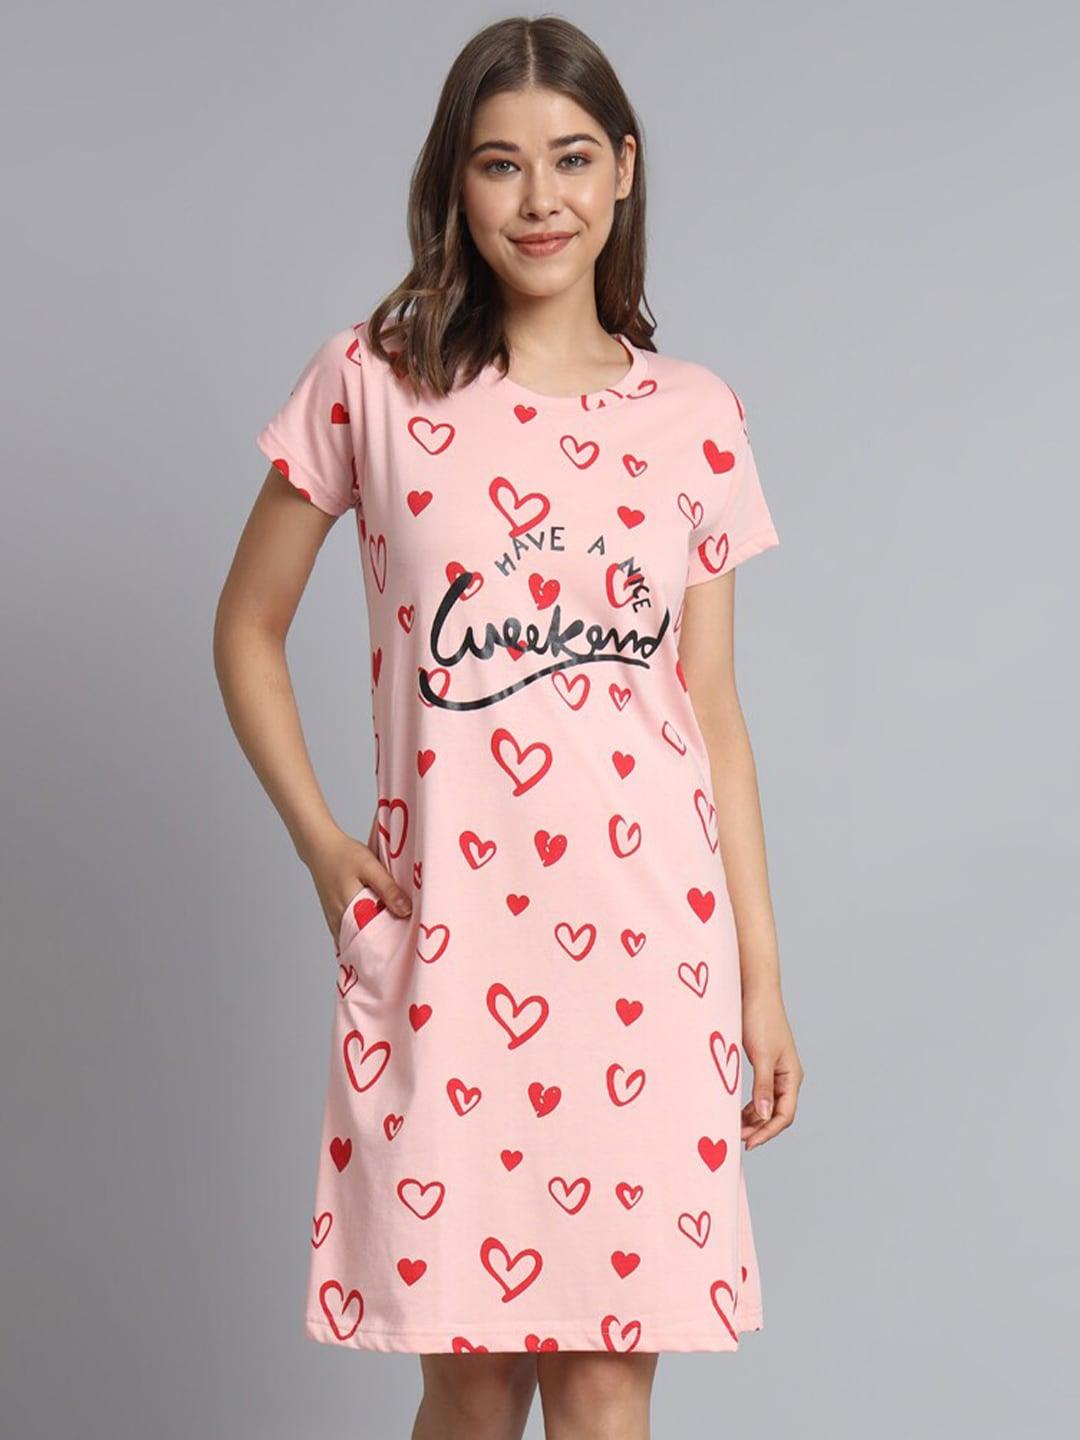 SEPHANI Conversational Printed Round Neck T-Shirt Night Dress